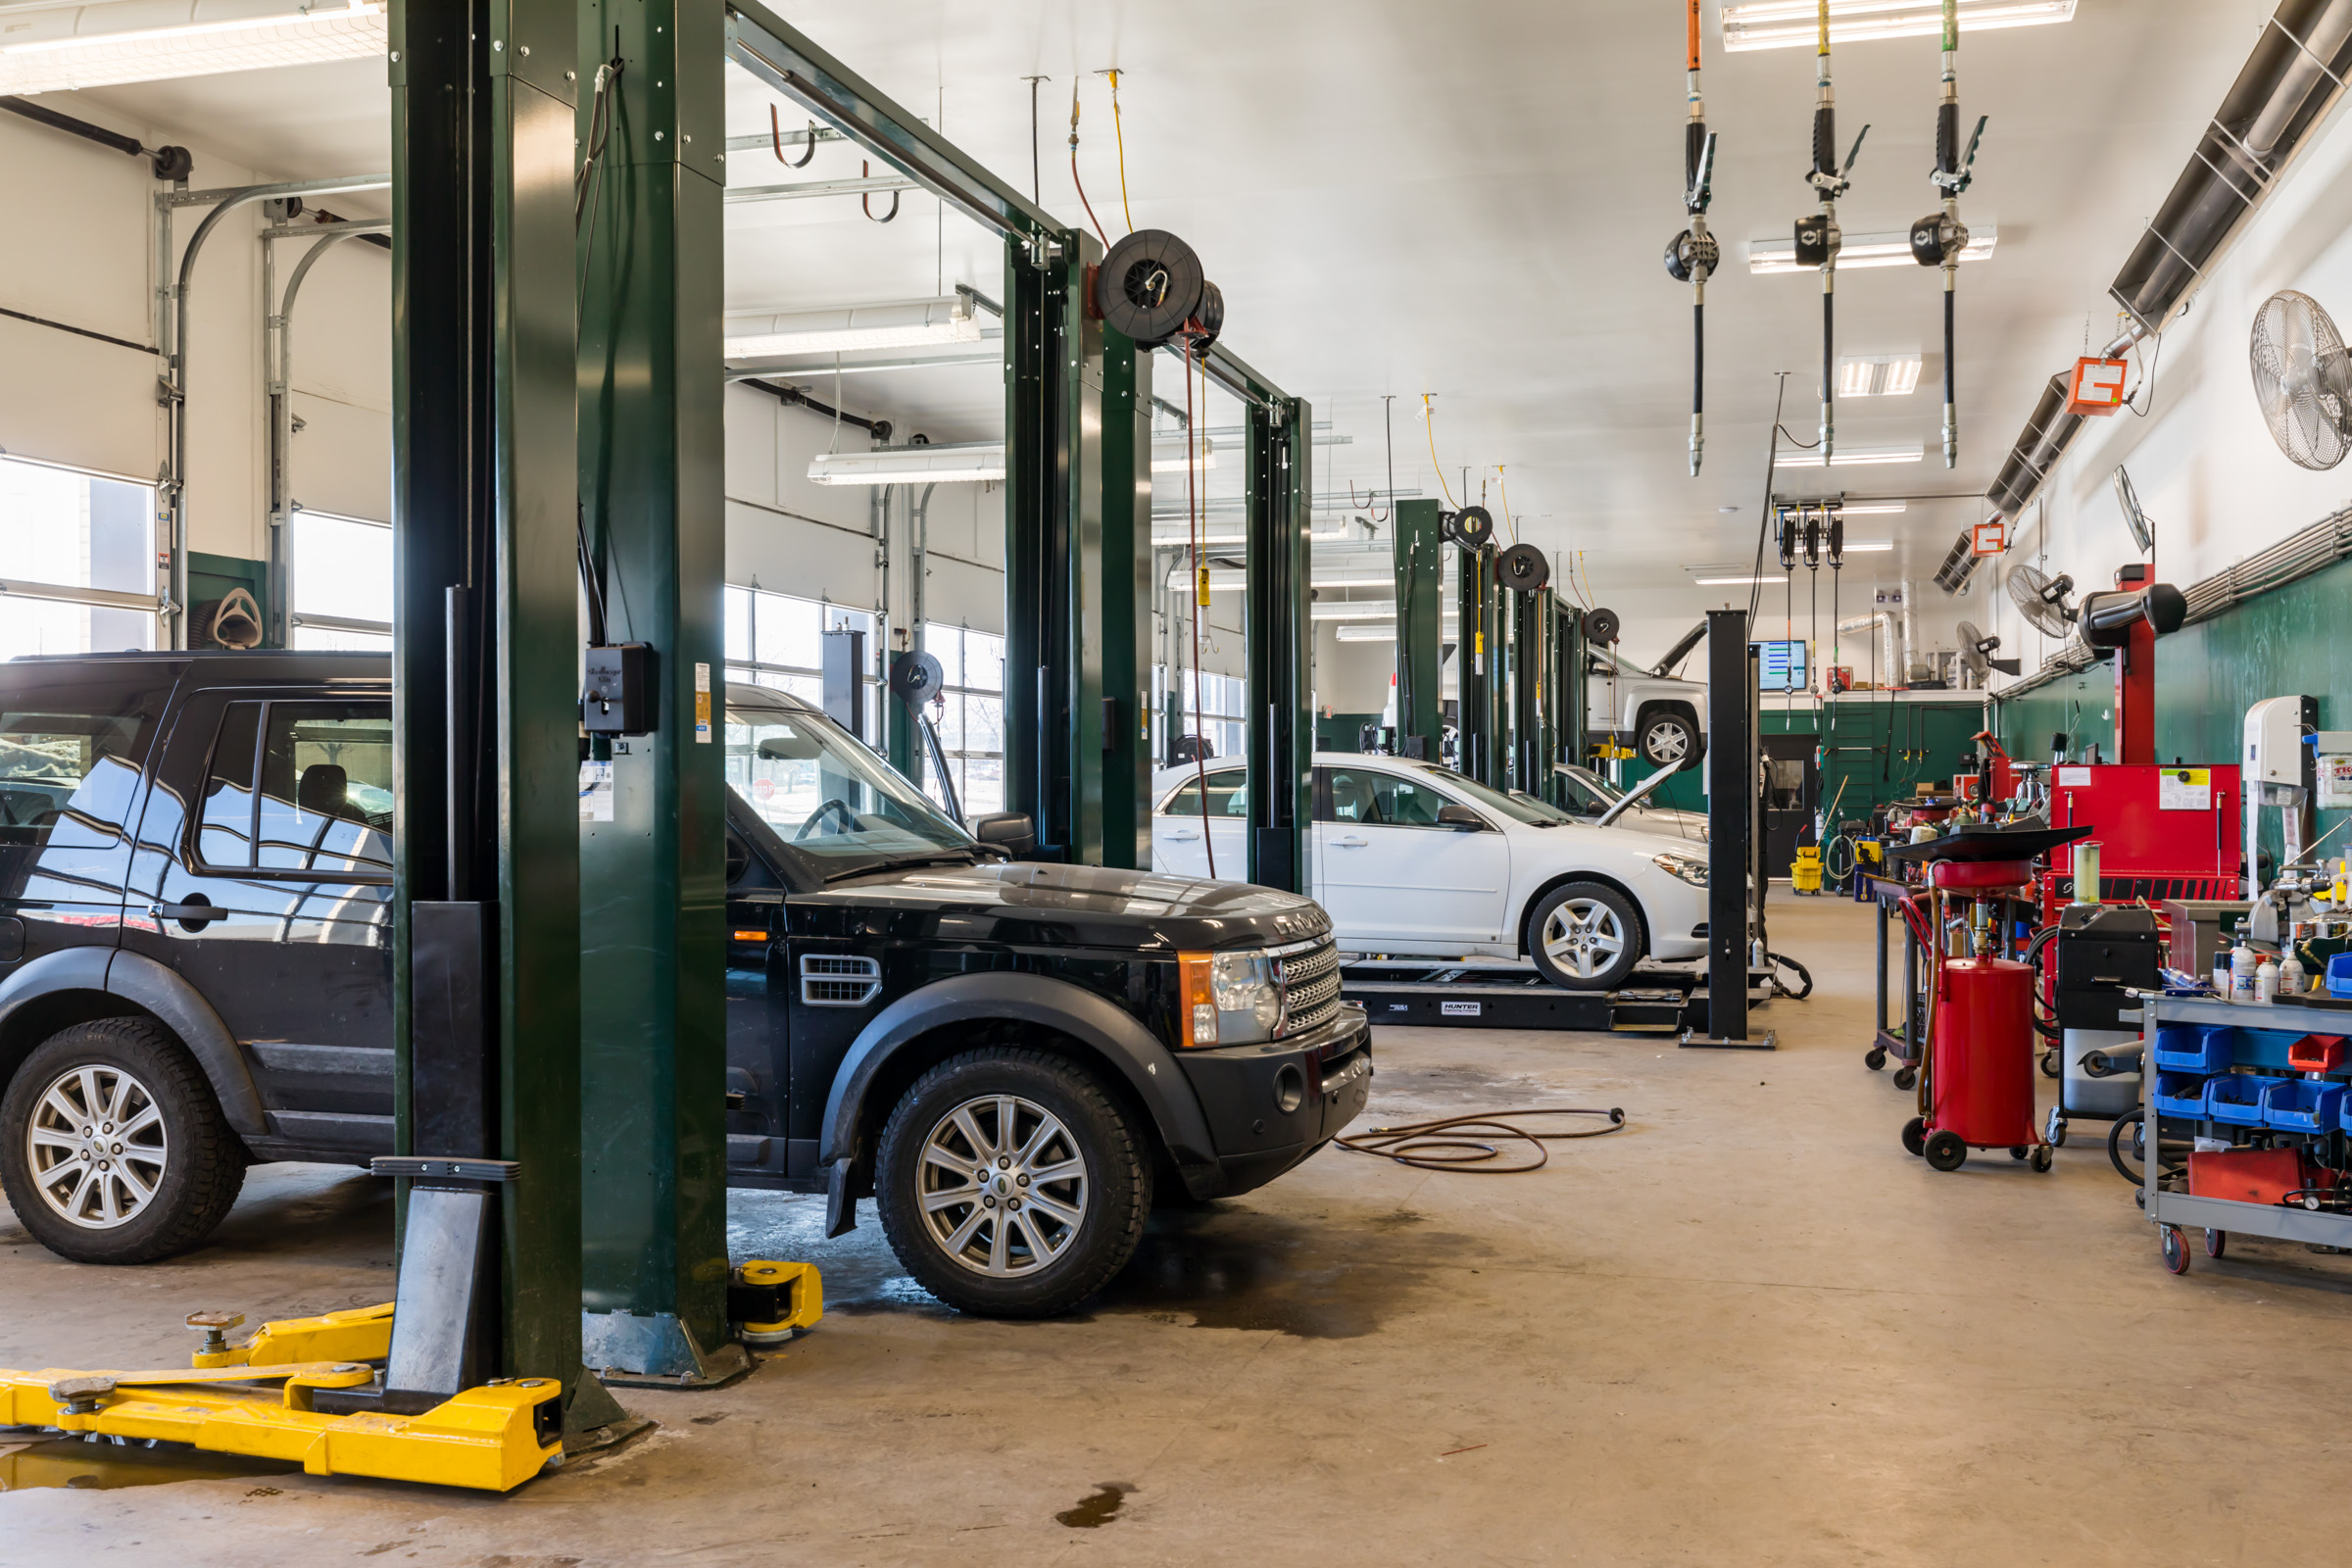 Vehicles in the CBAC garage bays undergoing maintenance